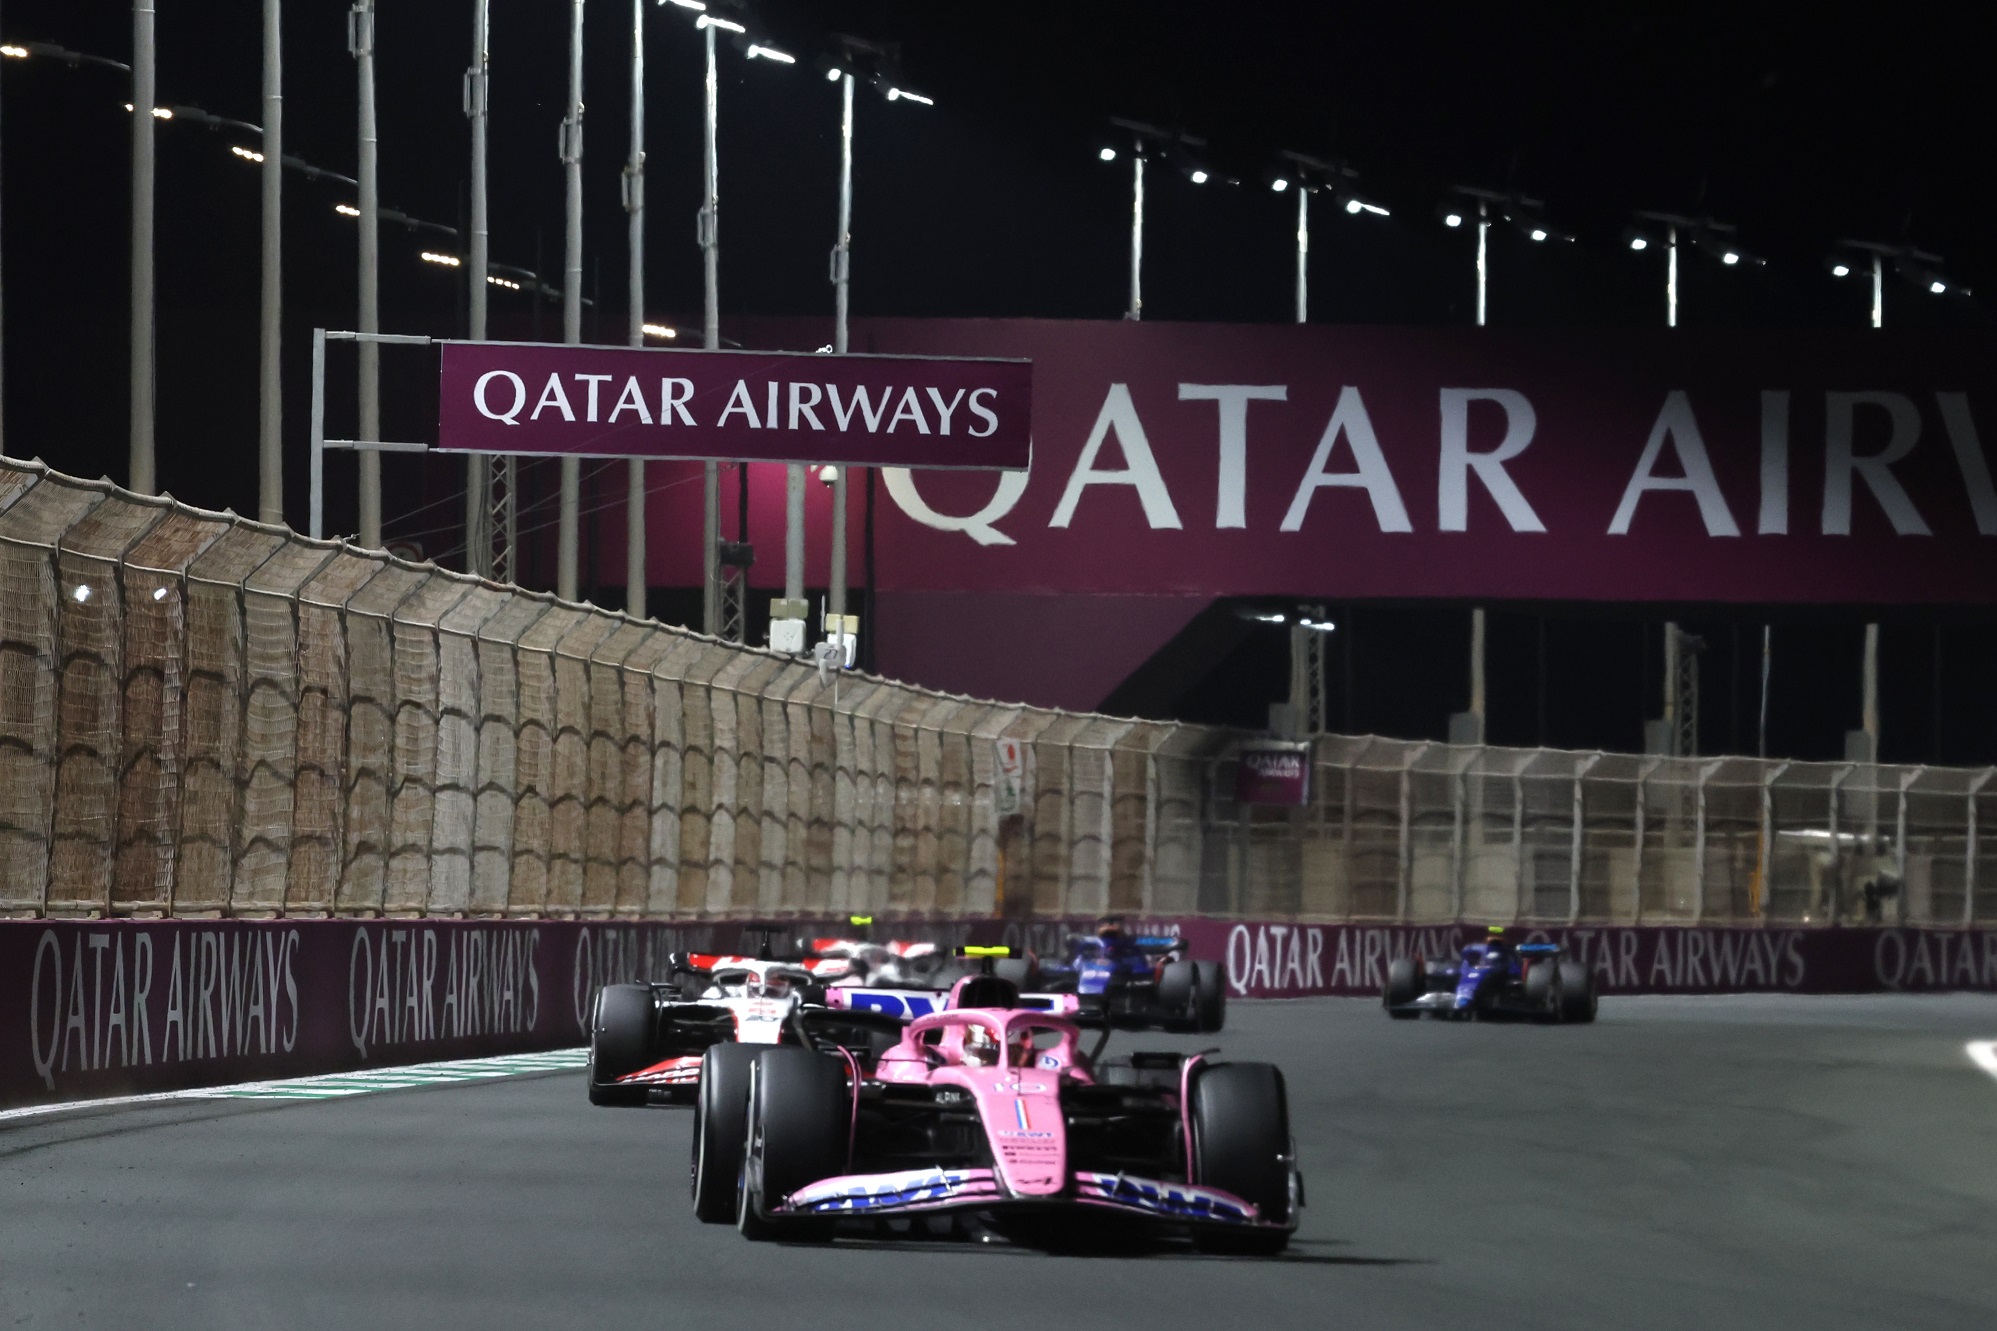 Qatar Airways Holidays Launches Travel Packages for the Formula 1® Qatar Airways Qatar Grand Prix 2023